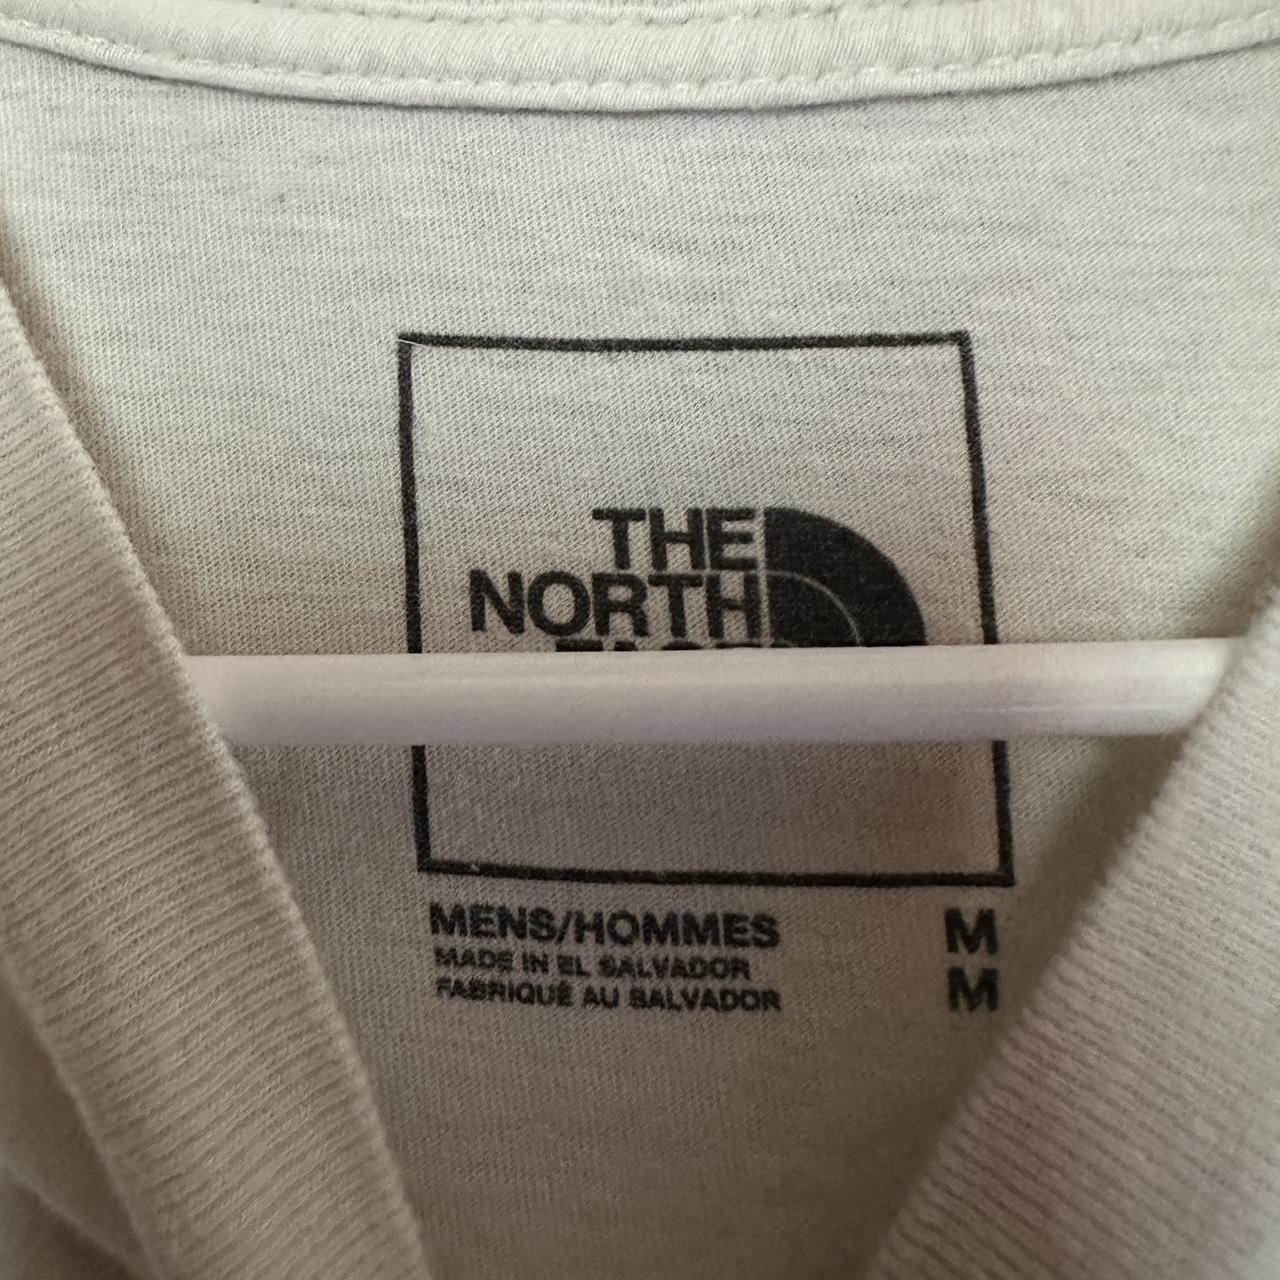 The North Face Men's Cream T-shirt (2)